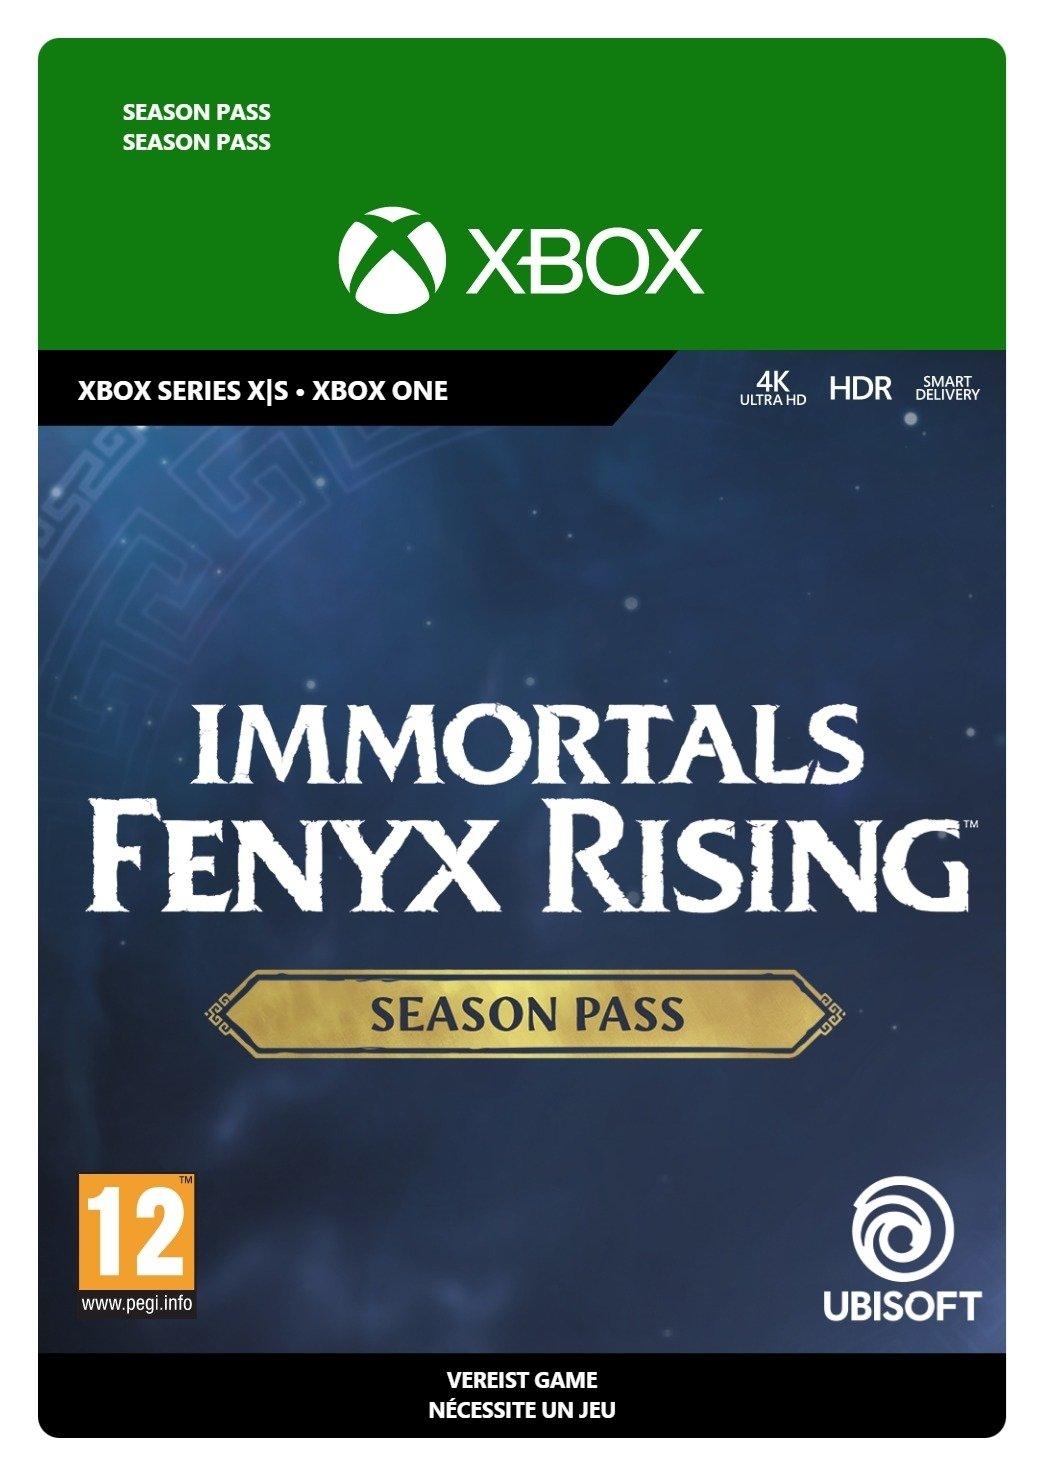 Immortals Fenyx Rising Season Pass - Xbox Series X/Xbox One - Season Pass | 7D4-00584 (1cc86b2c-af31-c64c-a229-03bec0257549)